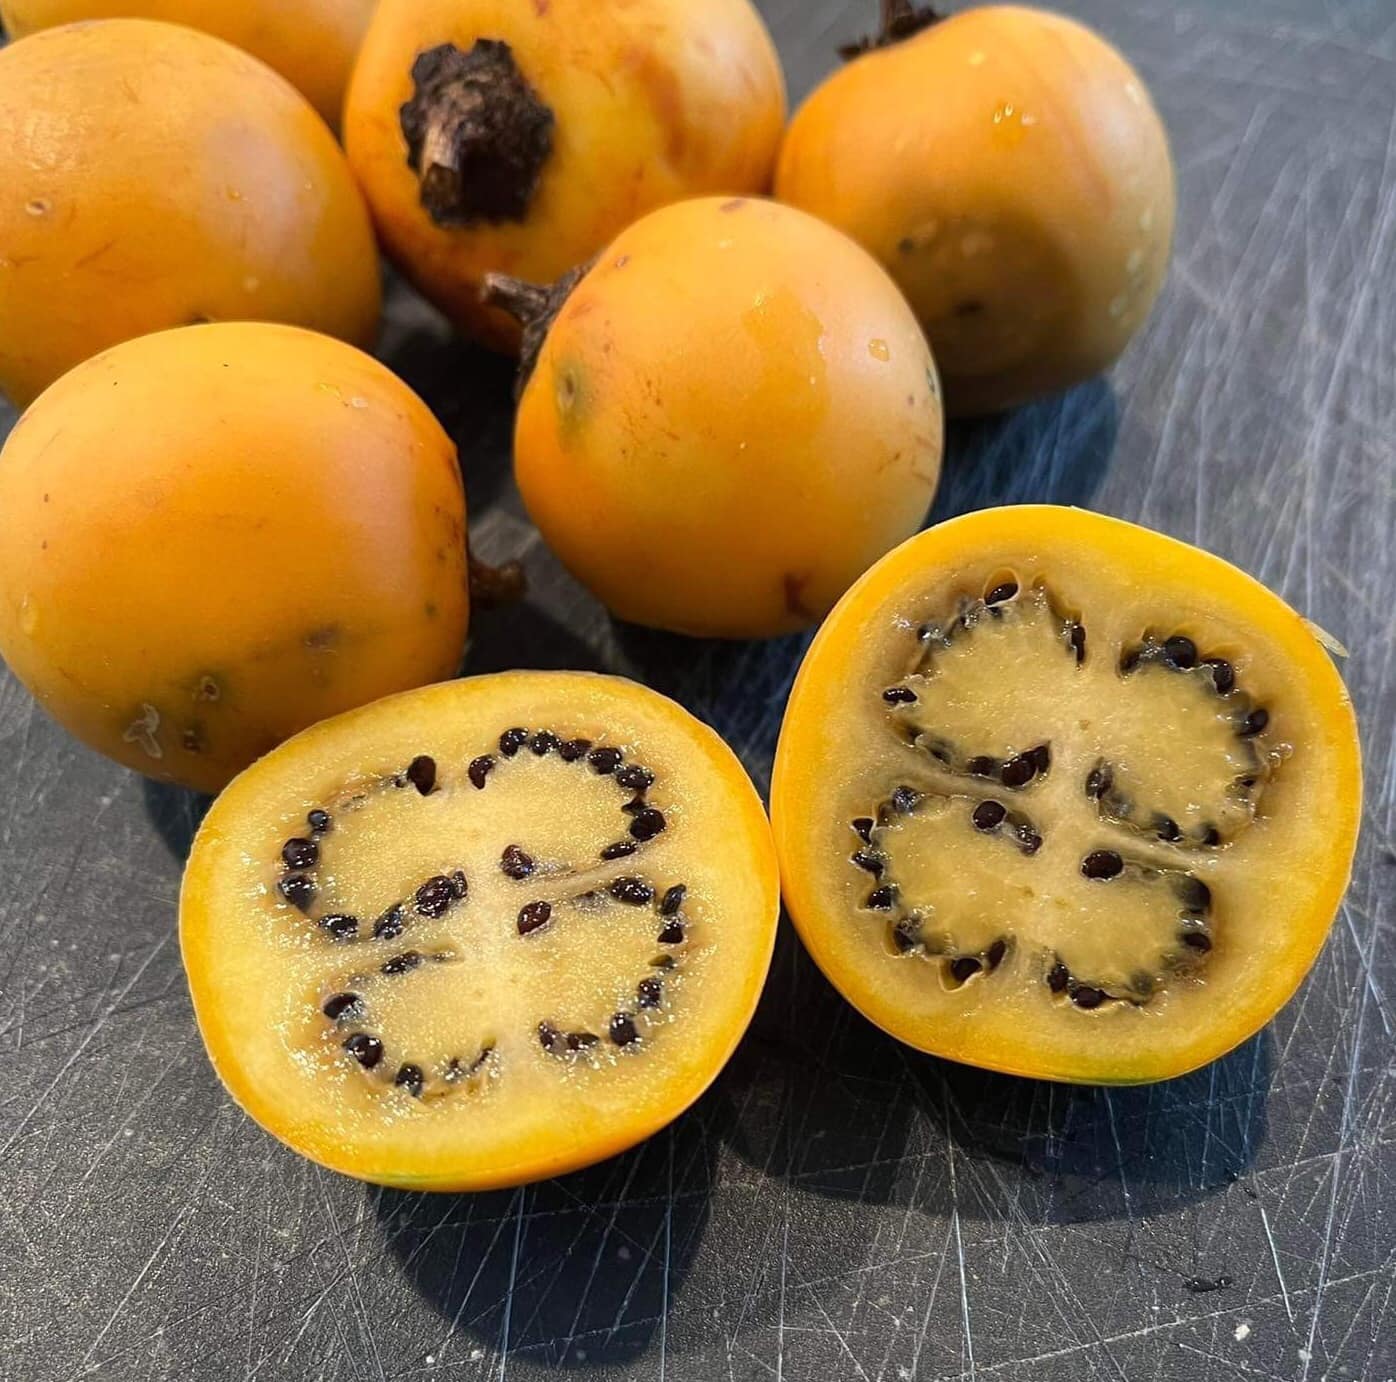 Juã-Açu - Solanum oocarpum - 1 potted seedling / 1 getopfter Sämling